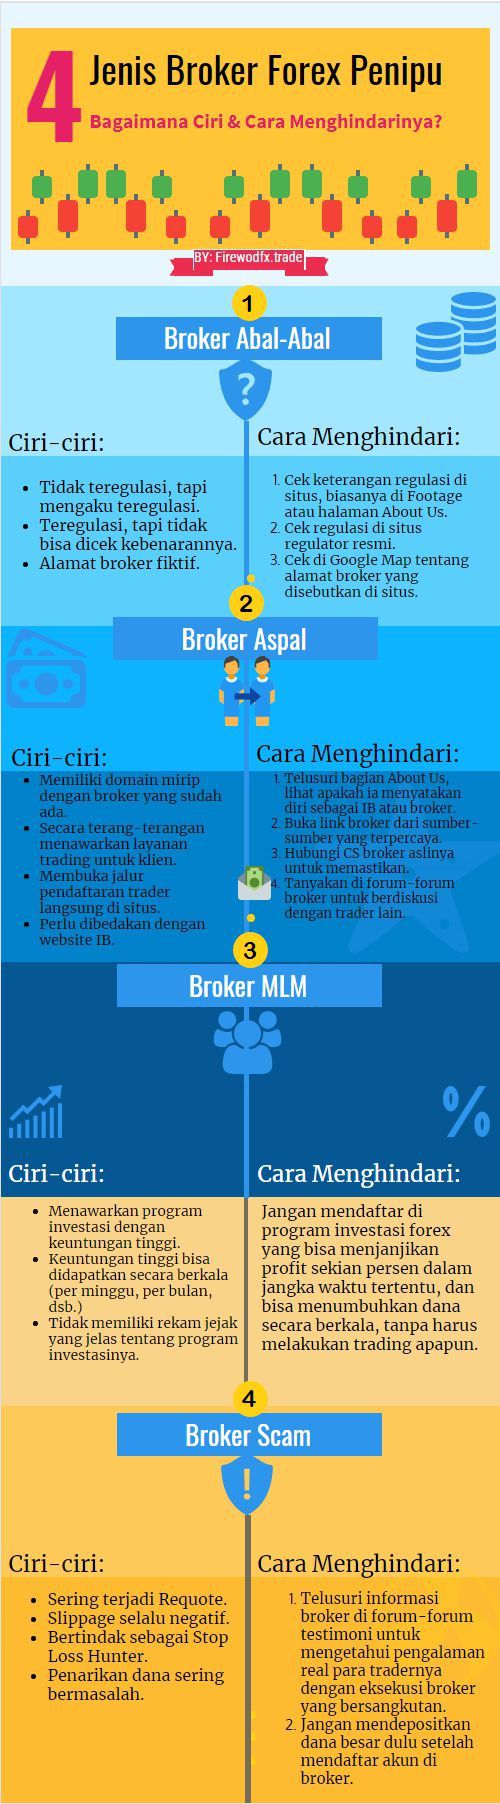 infografi jenis broker forex penipu